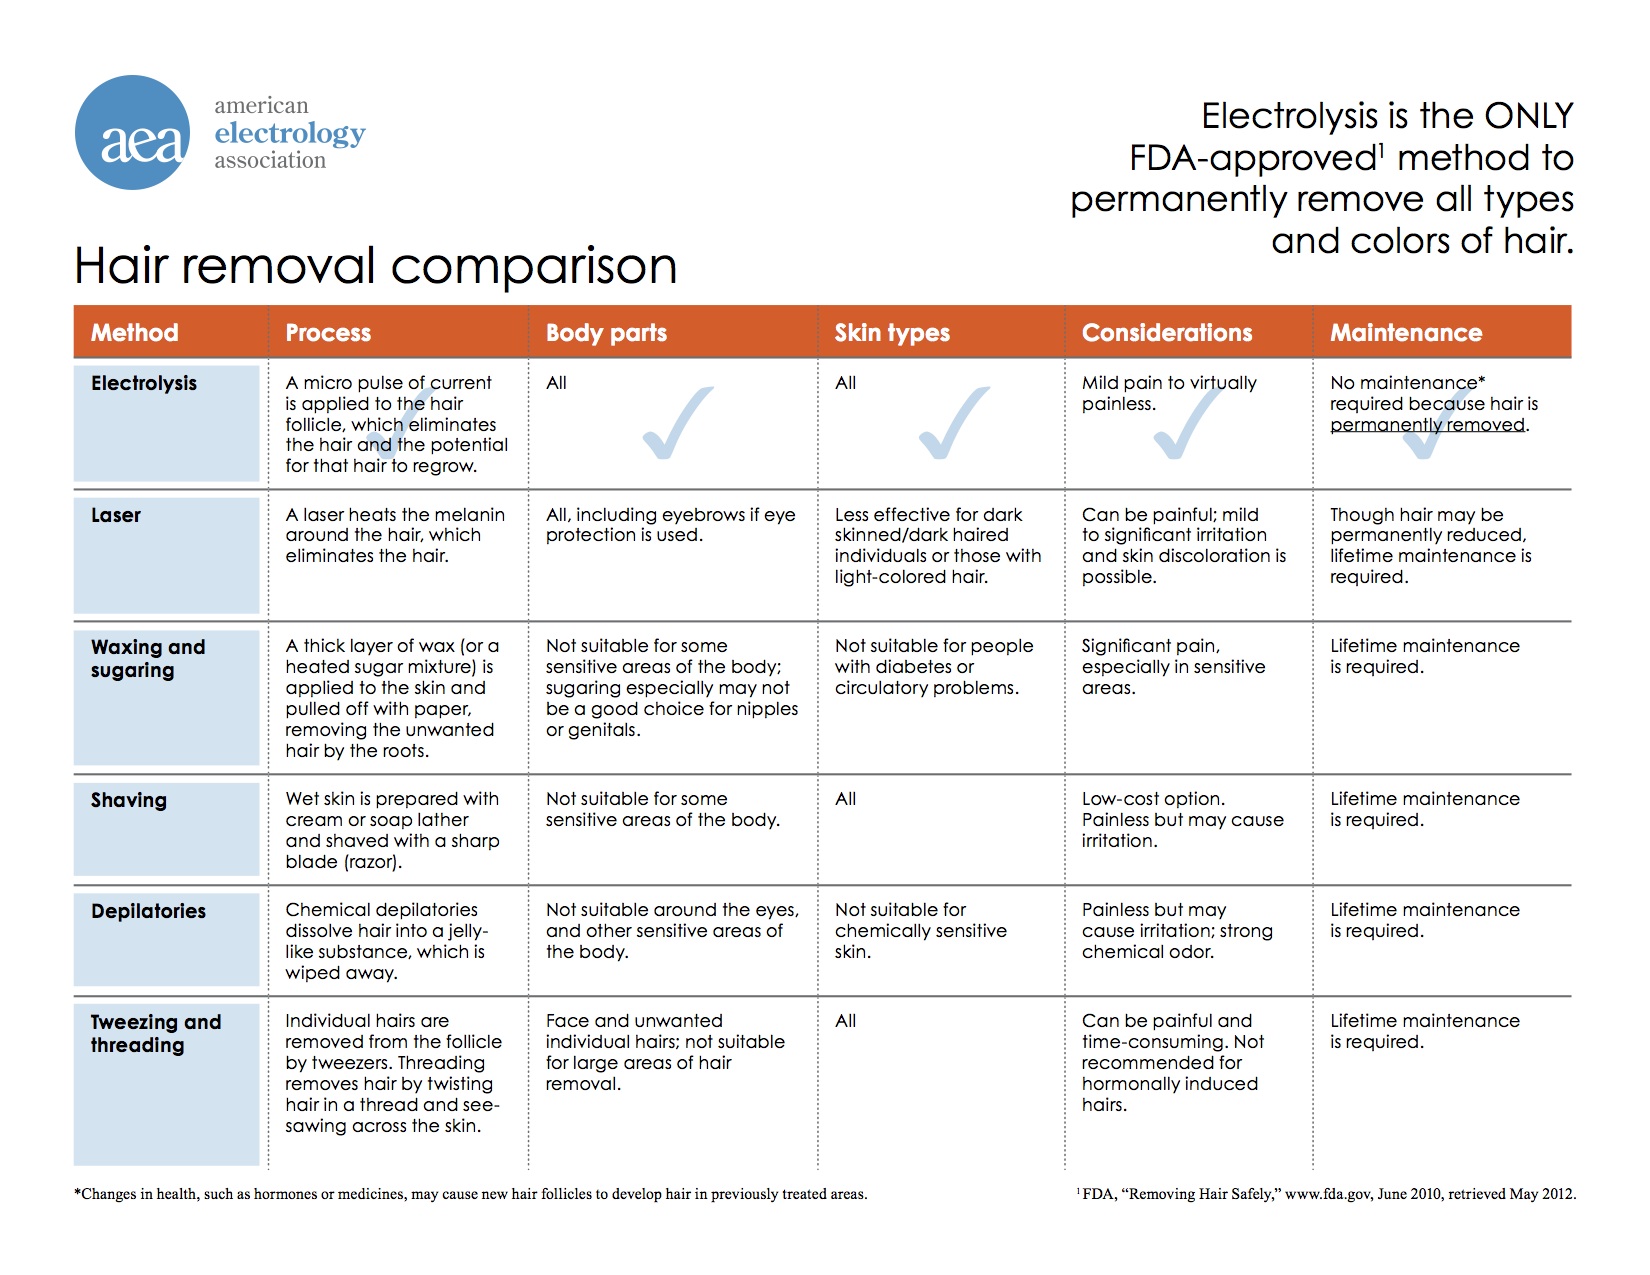 Electrolysis comparison